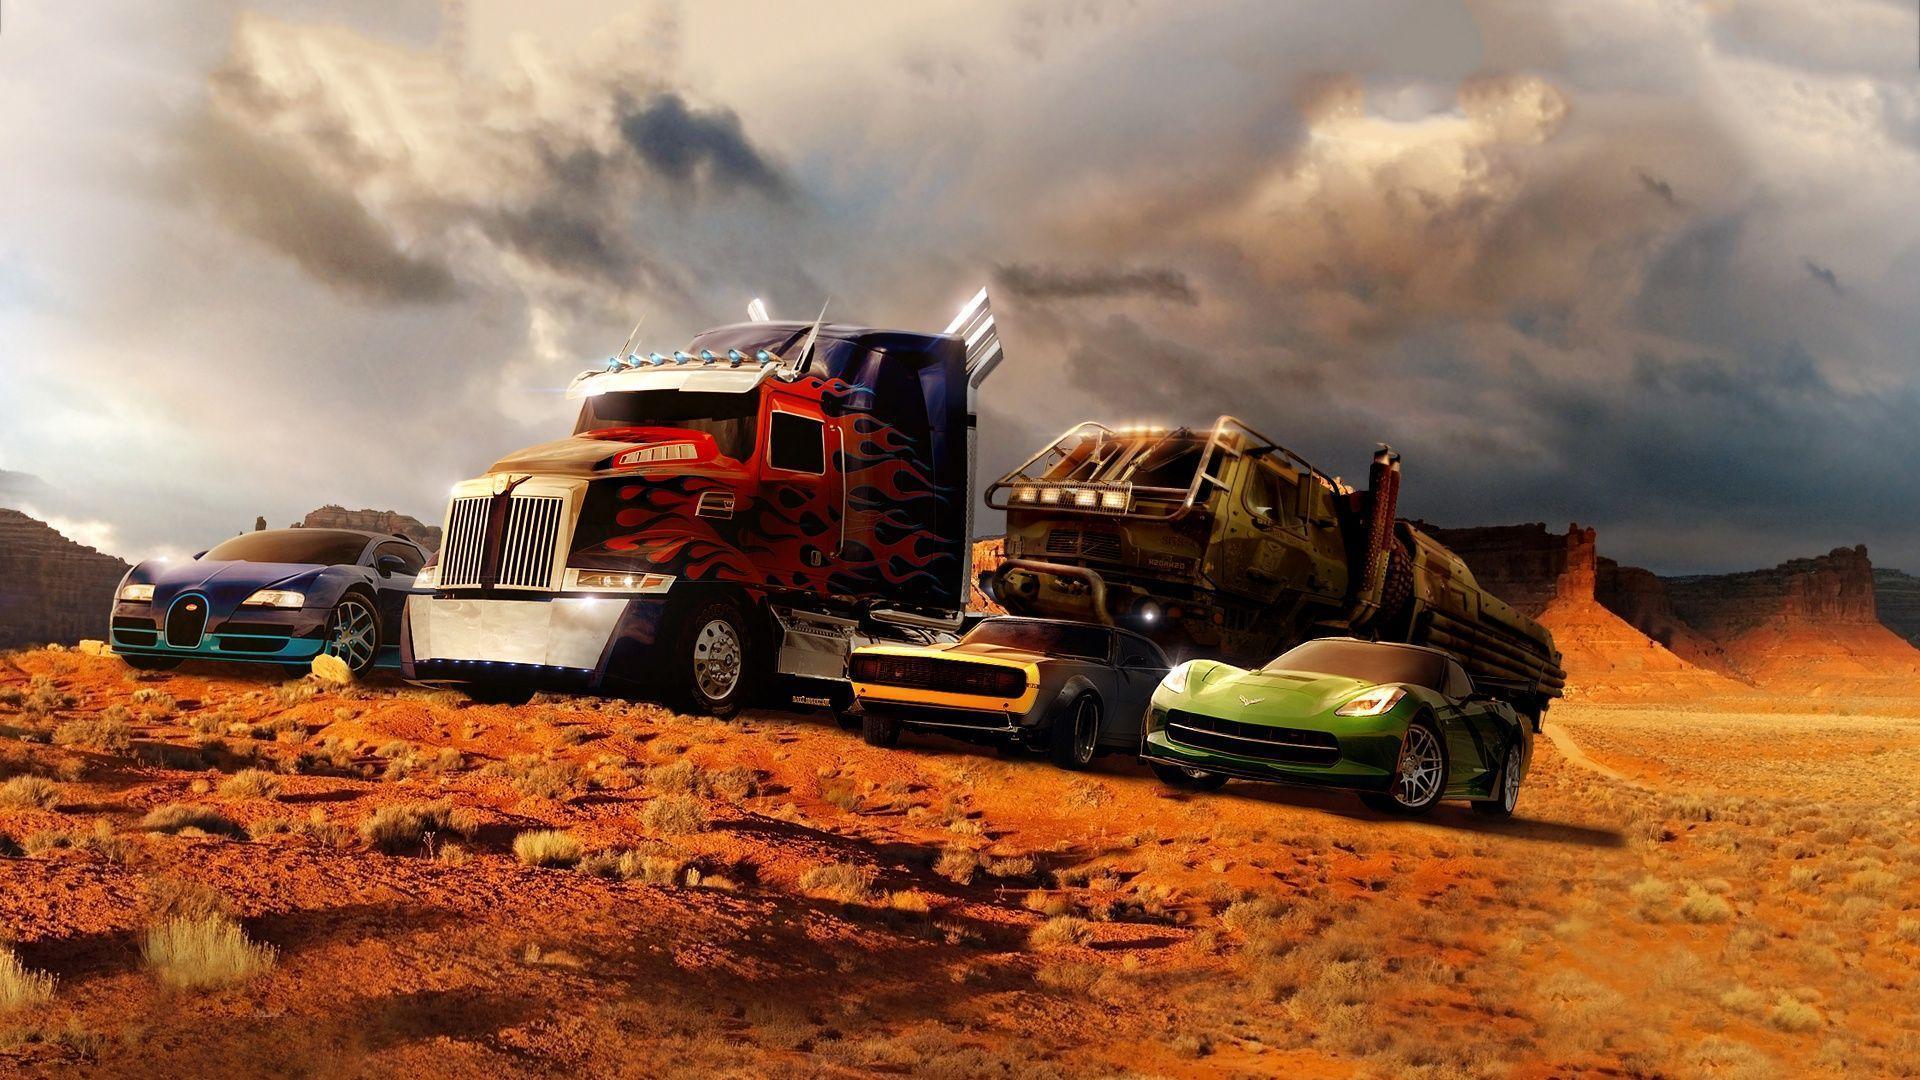 Wallpaper Full HD Transformers Desert Truck Sky Sports Car With Pics